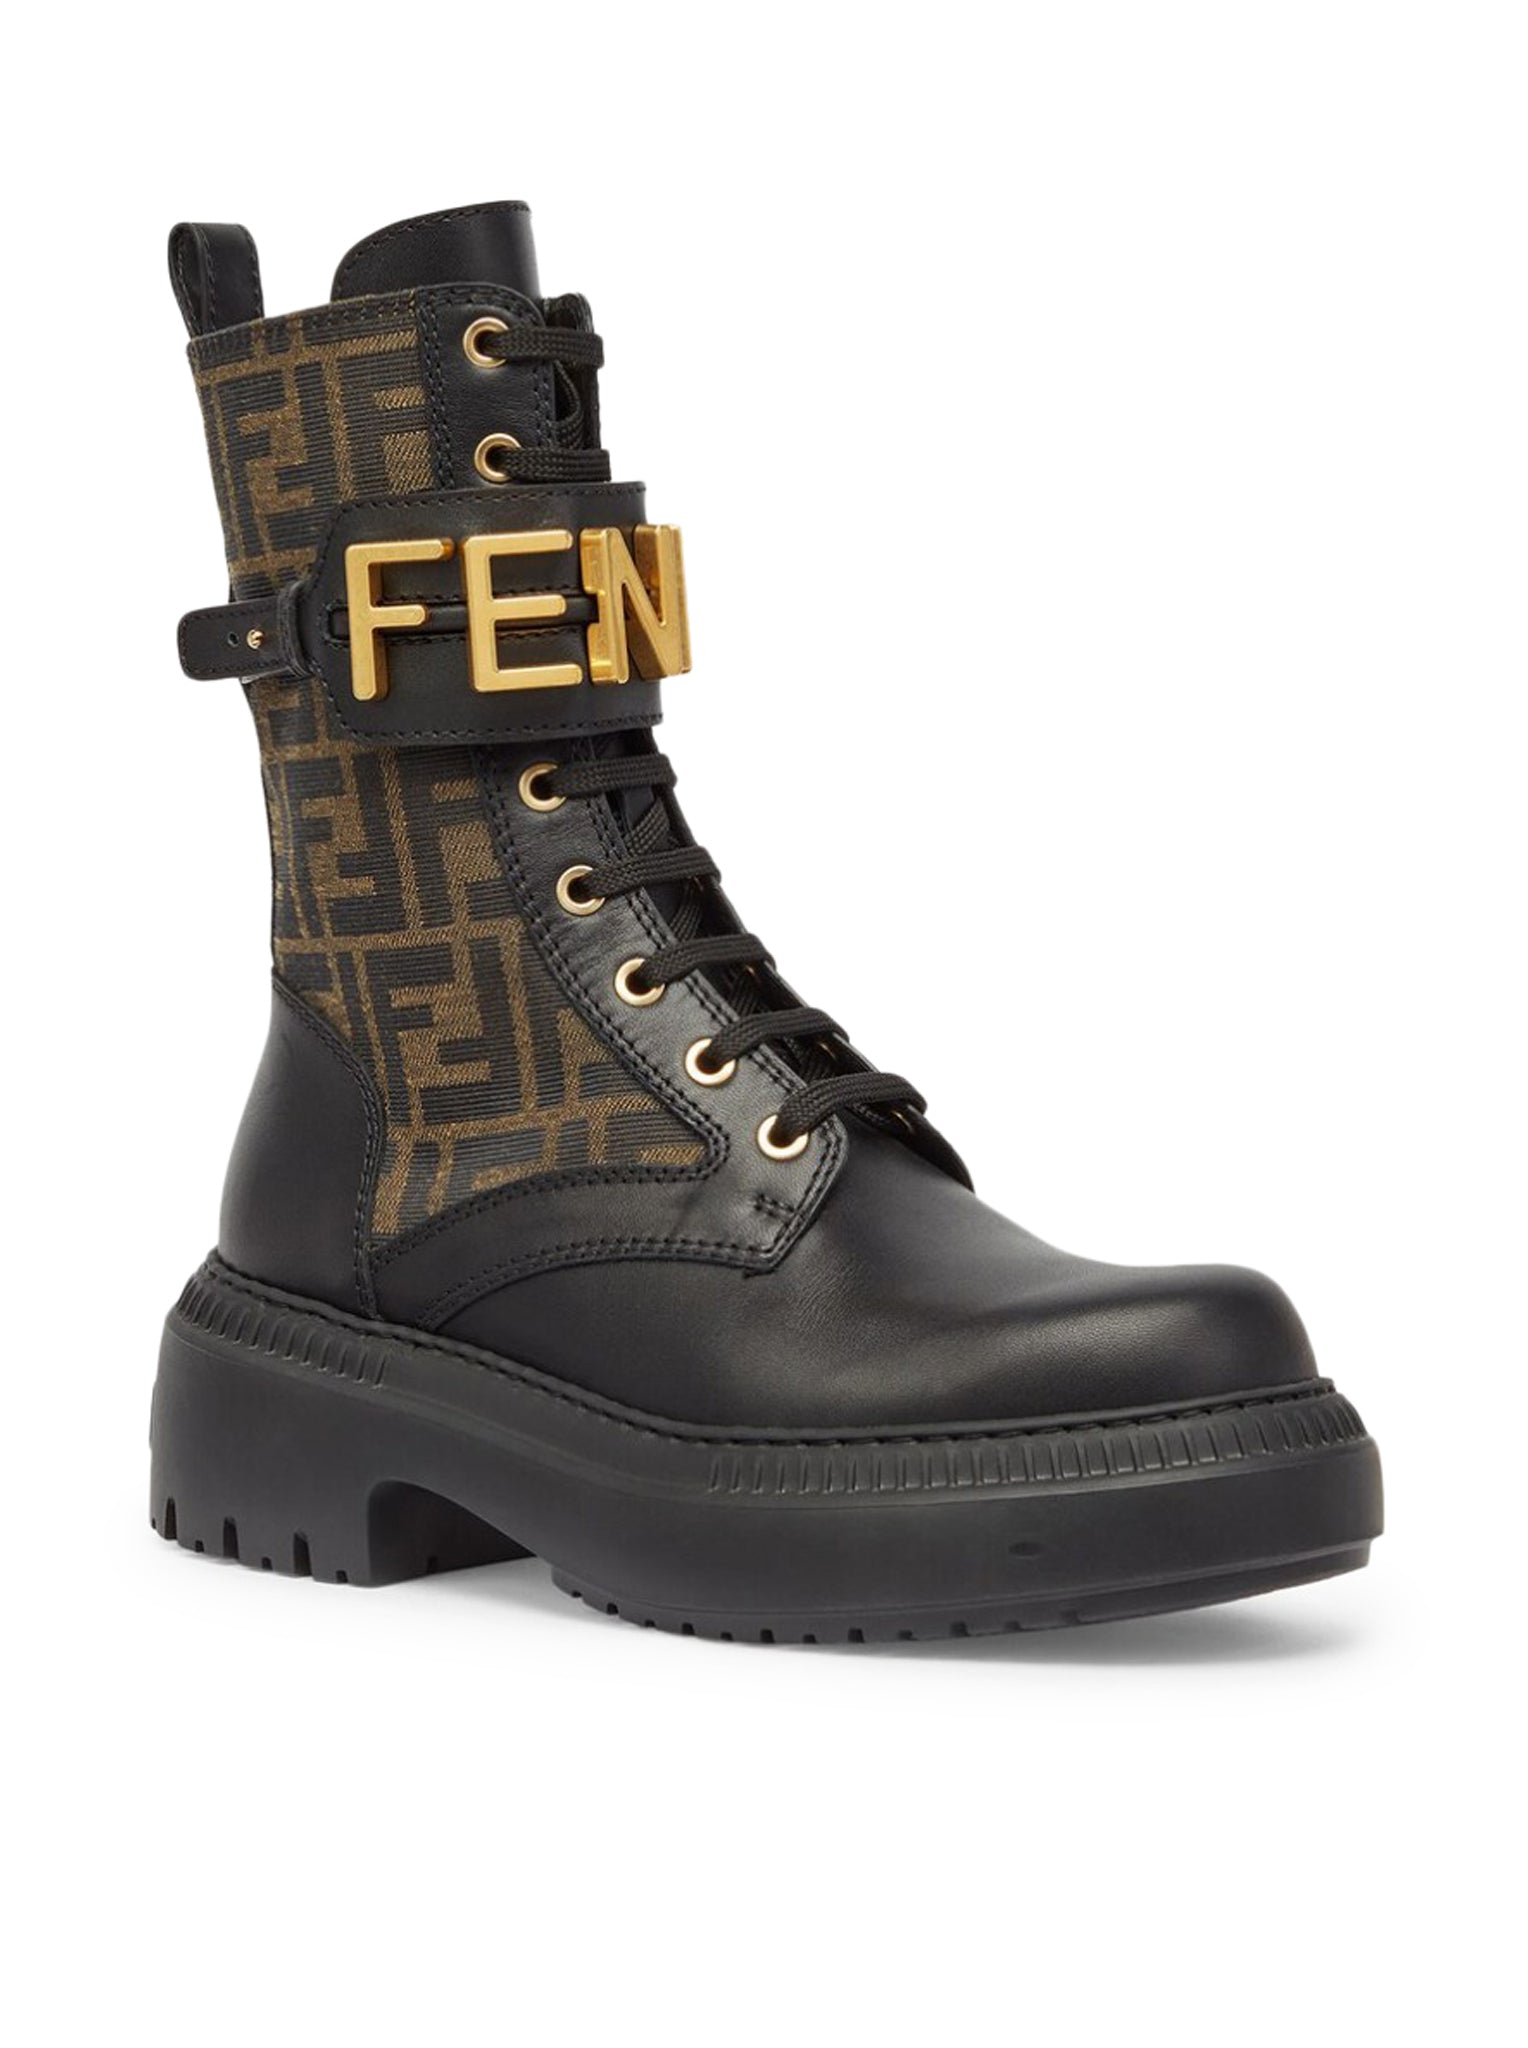 Fendigraphy boots